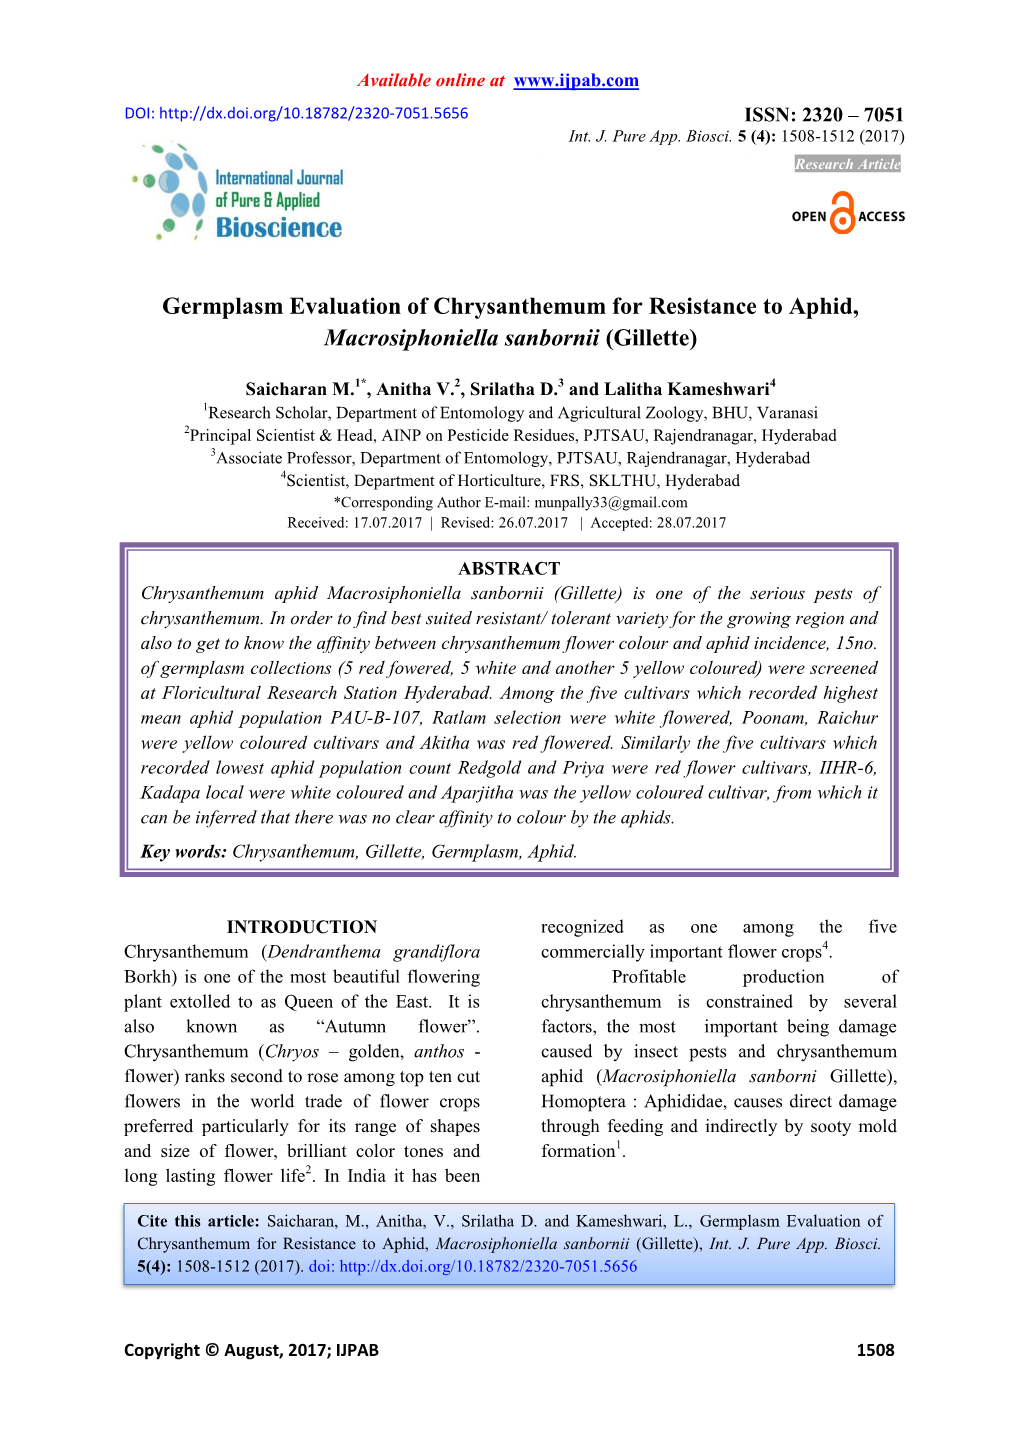 Germplasm Evaluation of Chrysanthemum for Resistance to Aphid, Macrosiphoniella Sanbornii (Gillette)